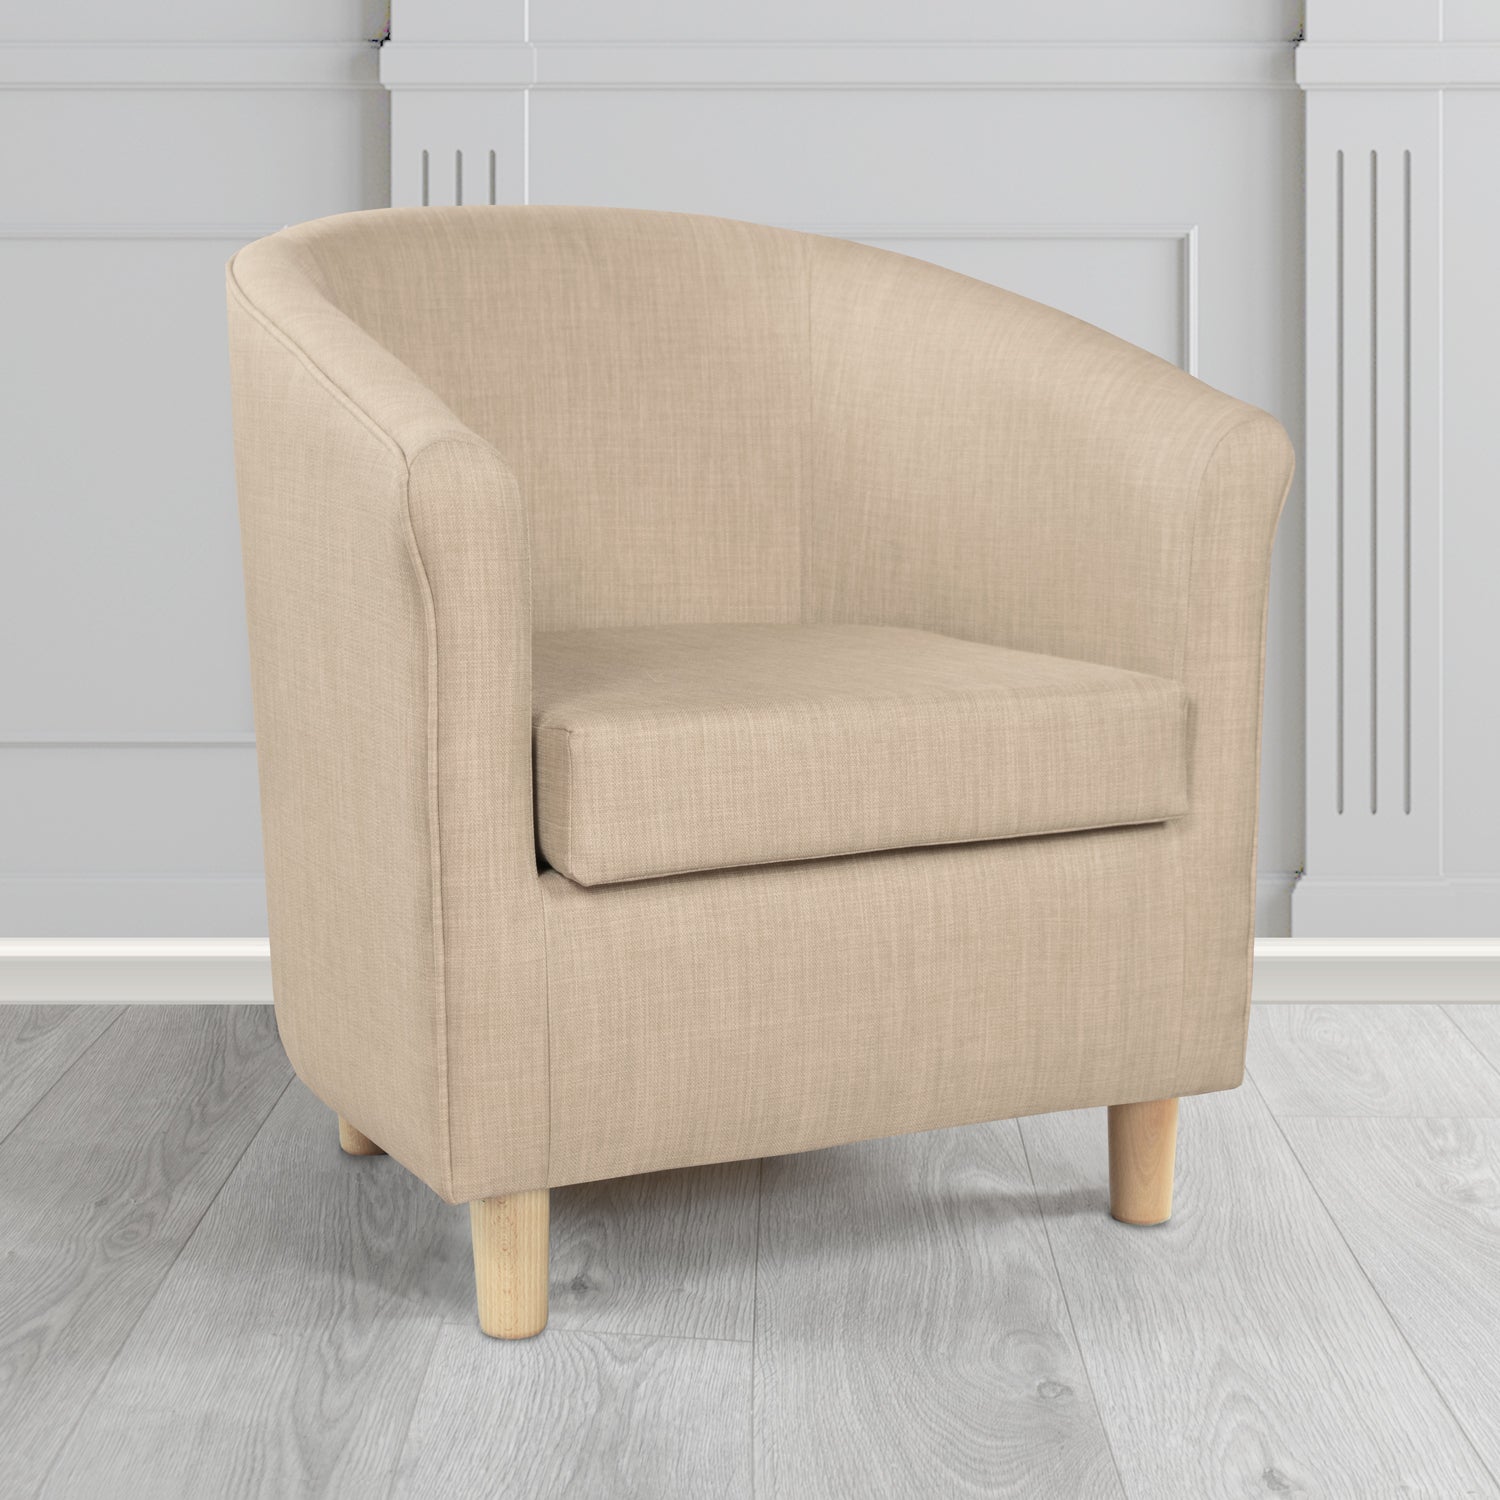 Tuscany Charles Sand Plain Linen Fabric Tub Chair - The Tub Chair Shop